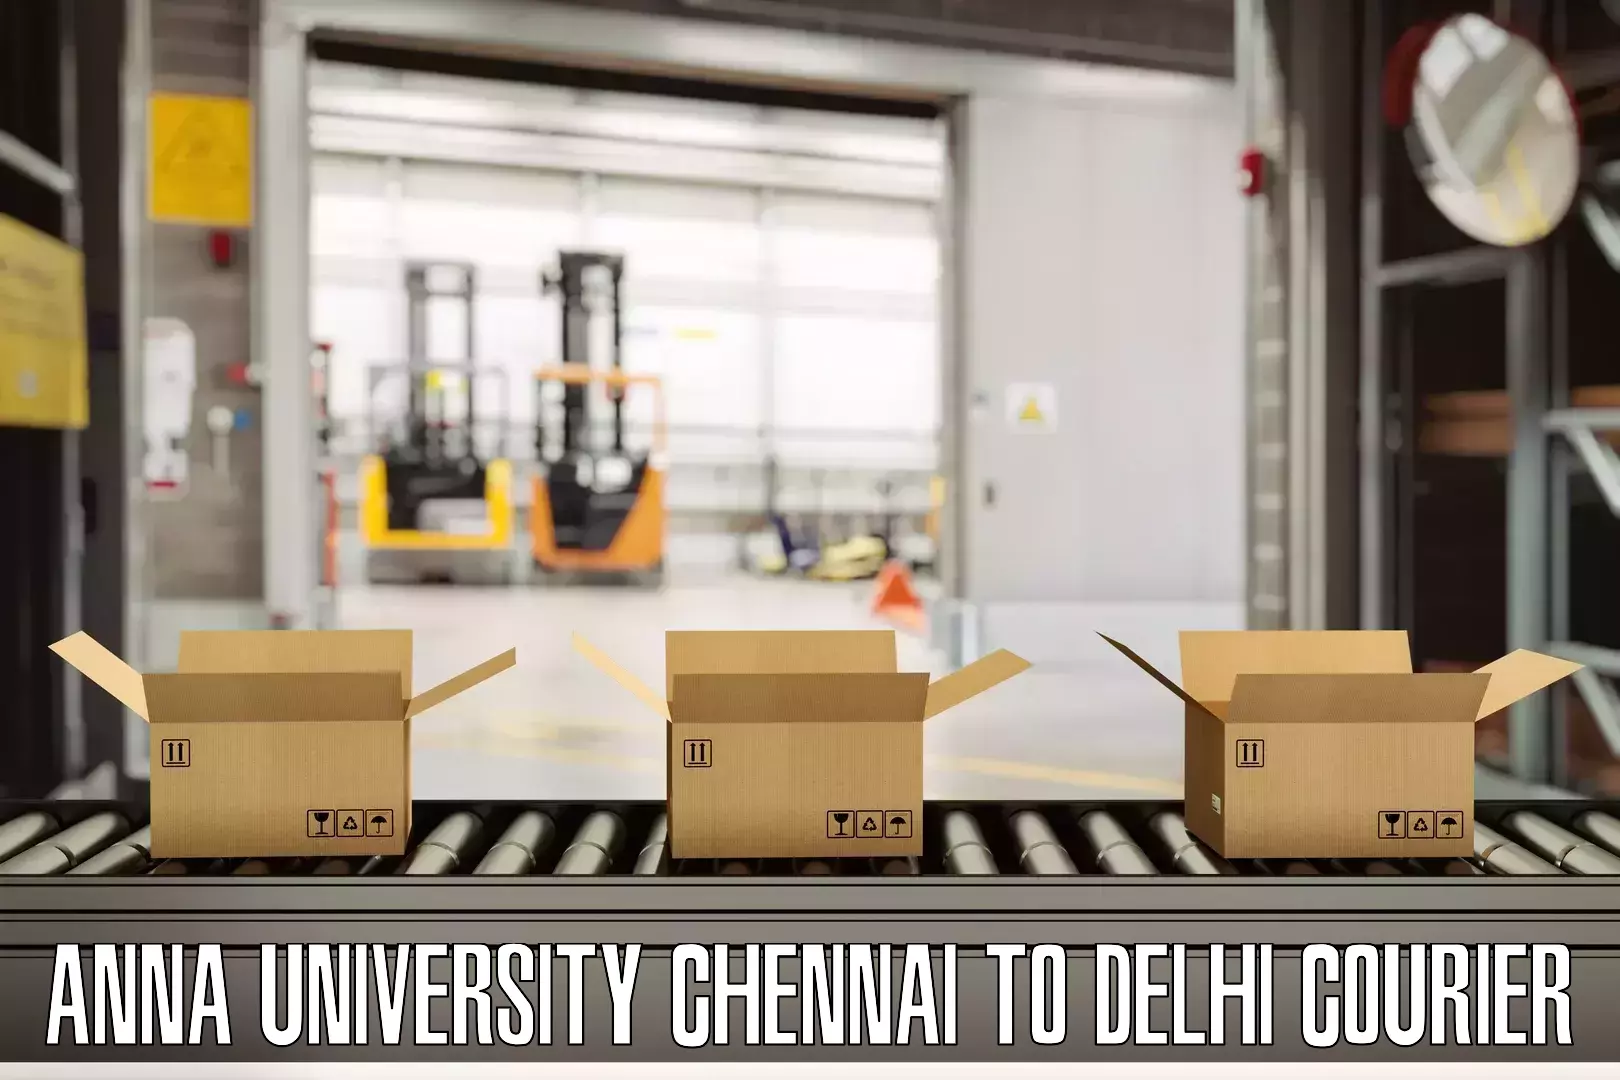 Door-to-door baggage service Anna University Chennai to Lodhi Road